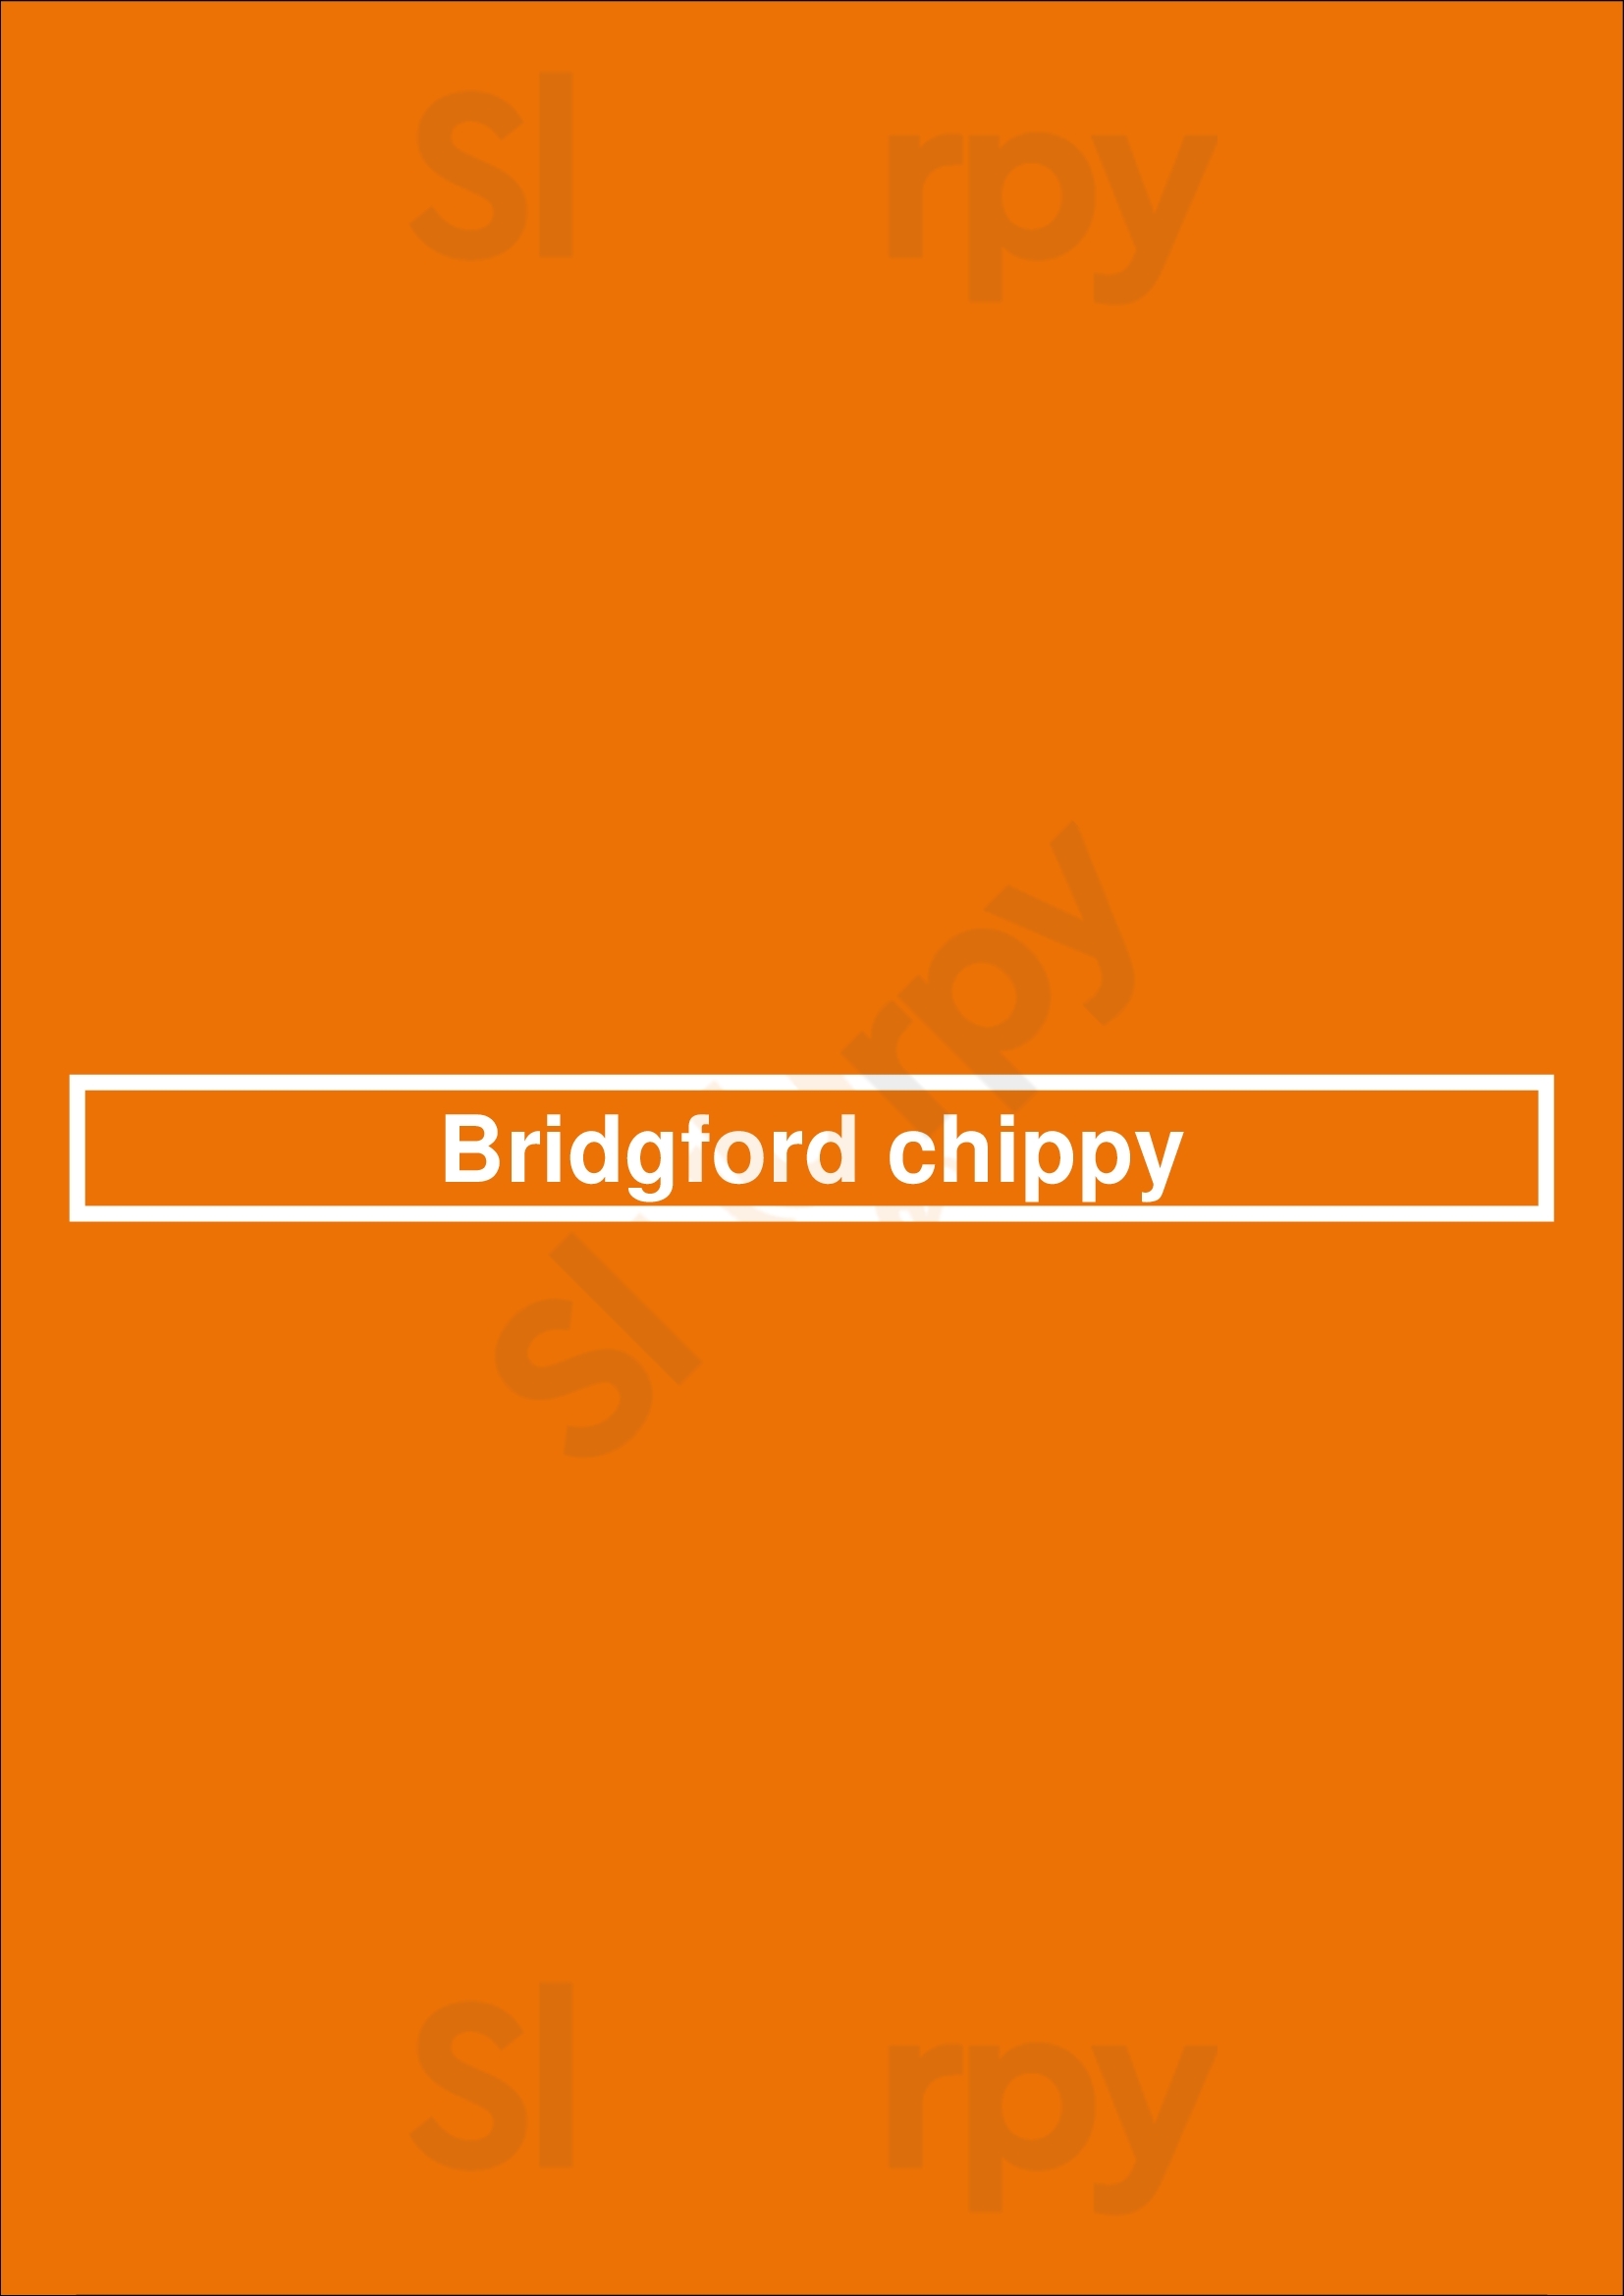 Bridgford Chippy Nottingham Menu - 1